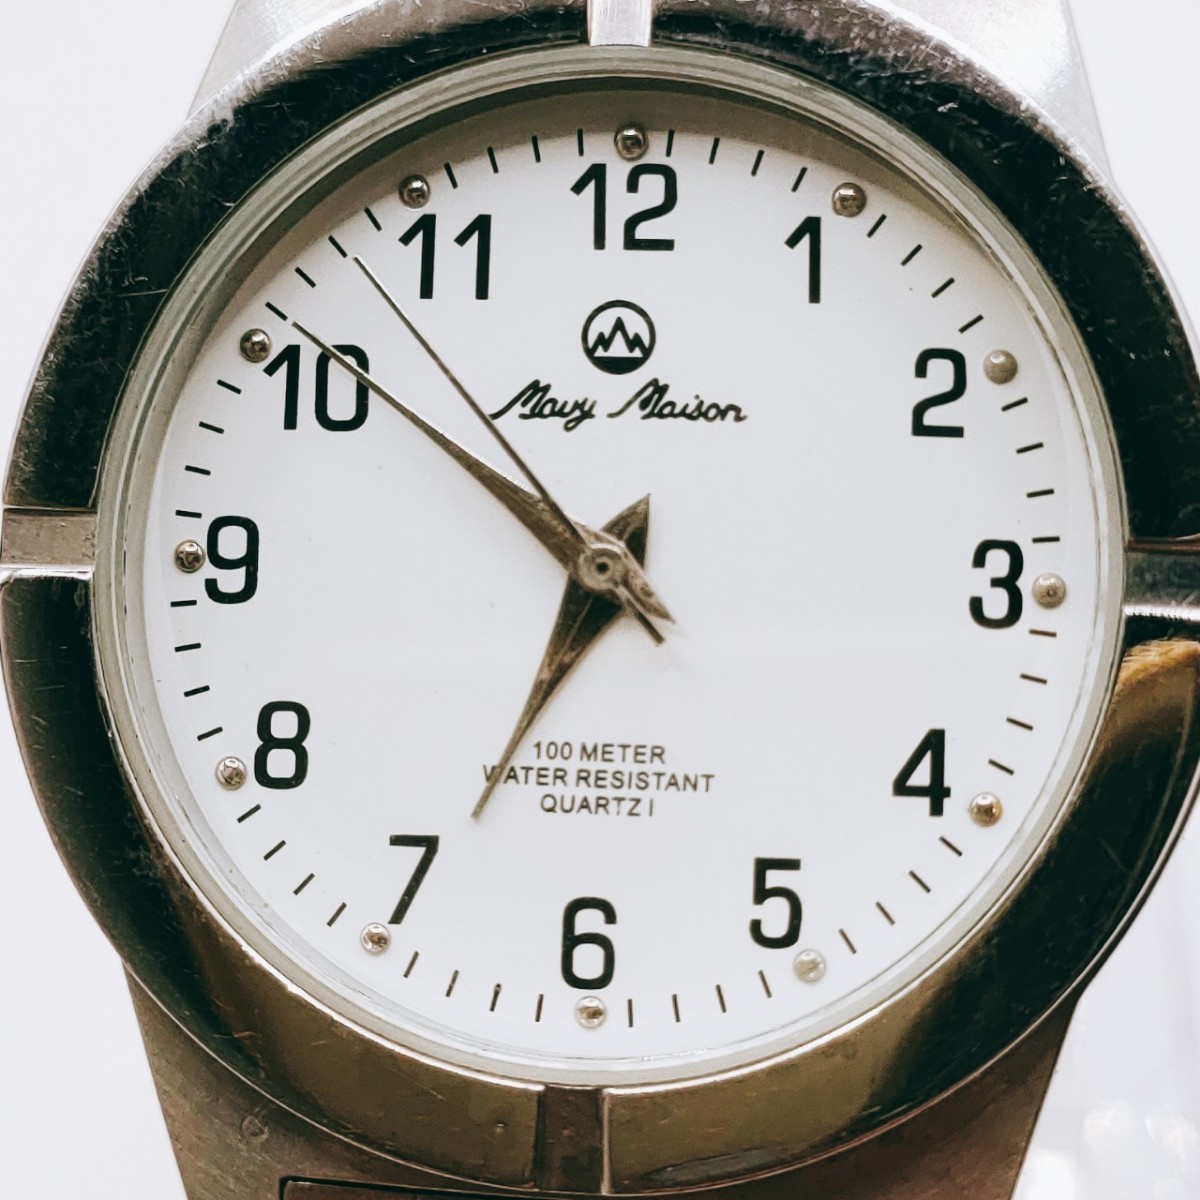 #167 Mavy Mason マビーメイソン 腕時計 アナログ 3針 白文字盤 シルバー色 レディース 時計 とけい トケイ アクセサリー ヴィンテージ_画像2